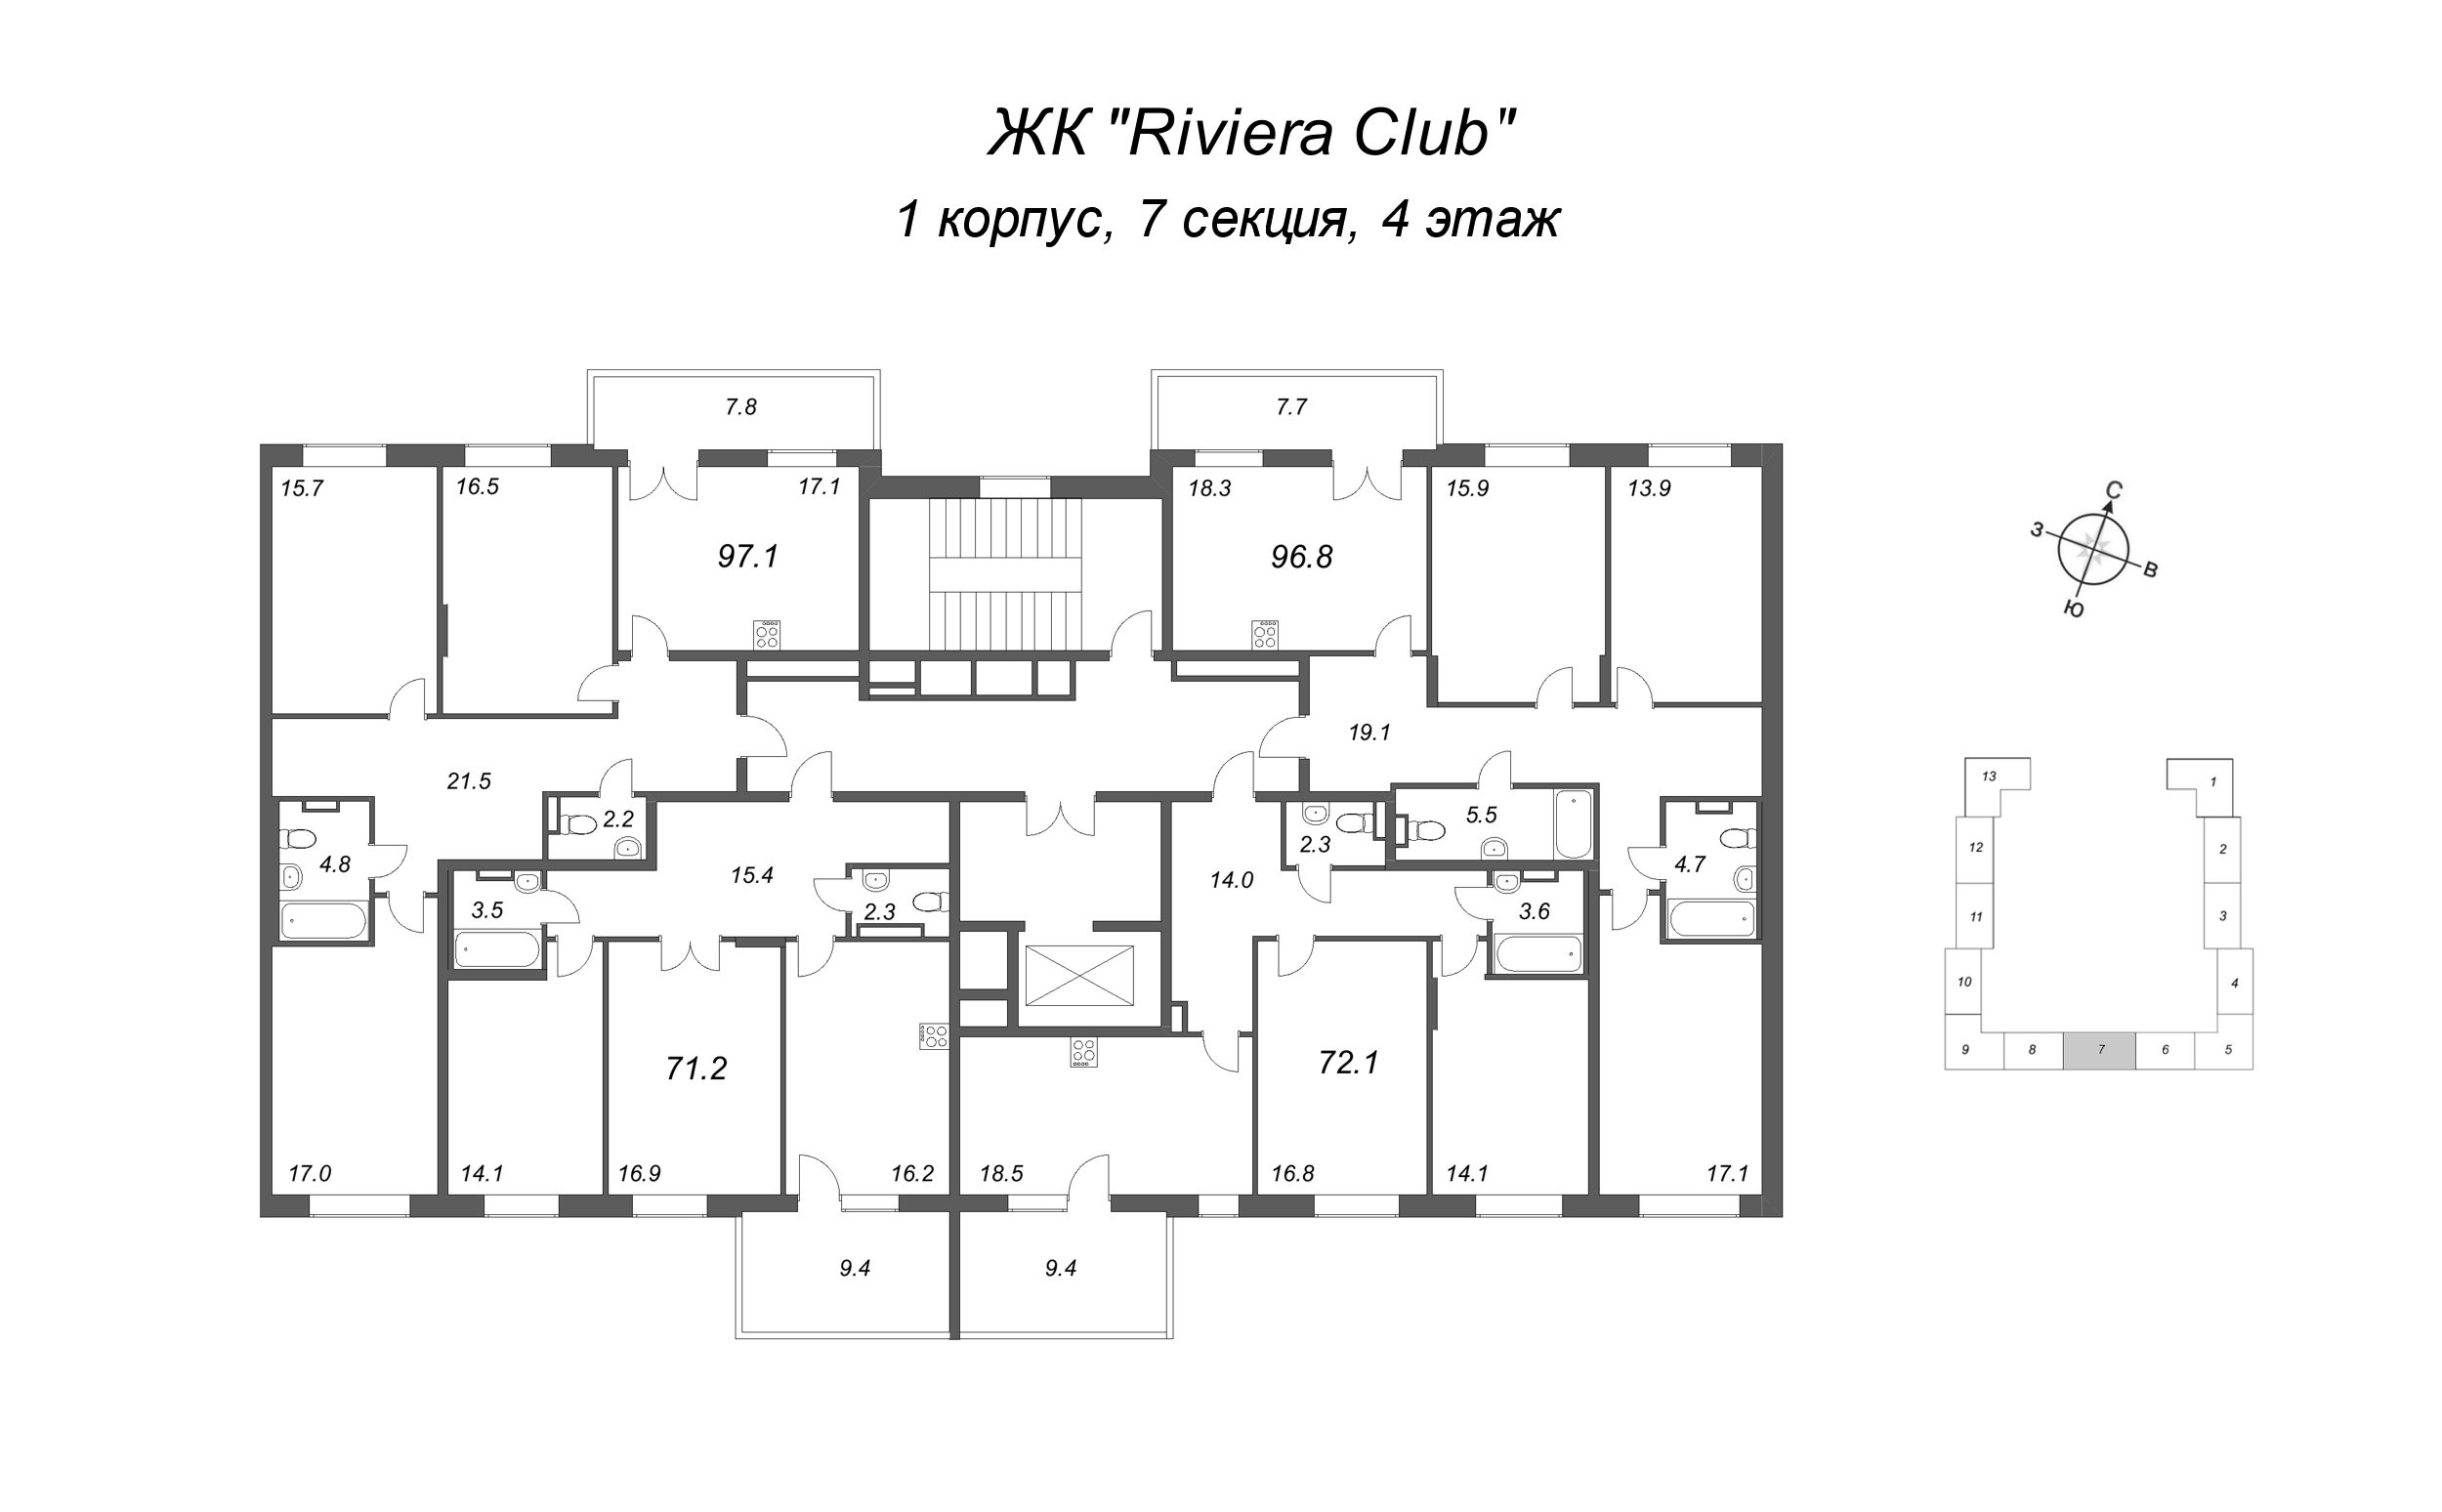 4-комнатная (Евро) квартира, 97.1 м² - планировка этажа